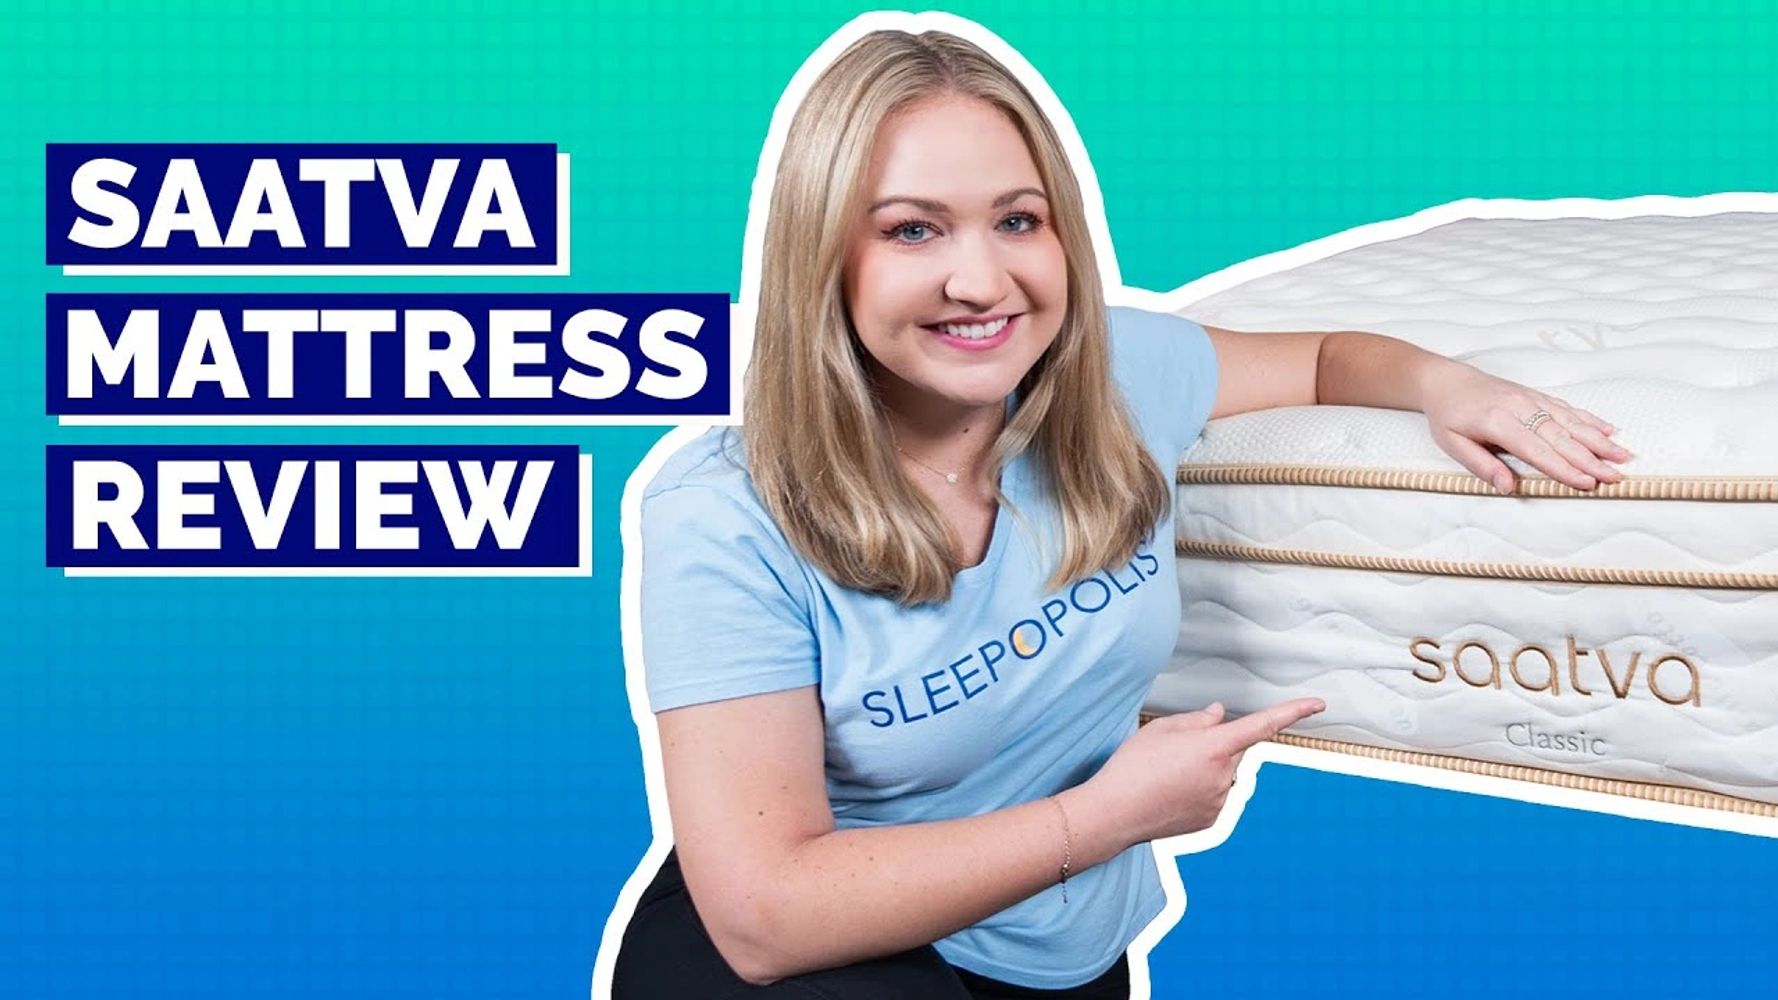 Official Website: - https://nutraweb24x7.com/get-saatva-mattresses/

